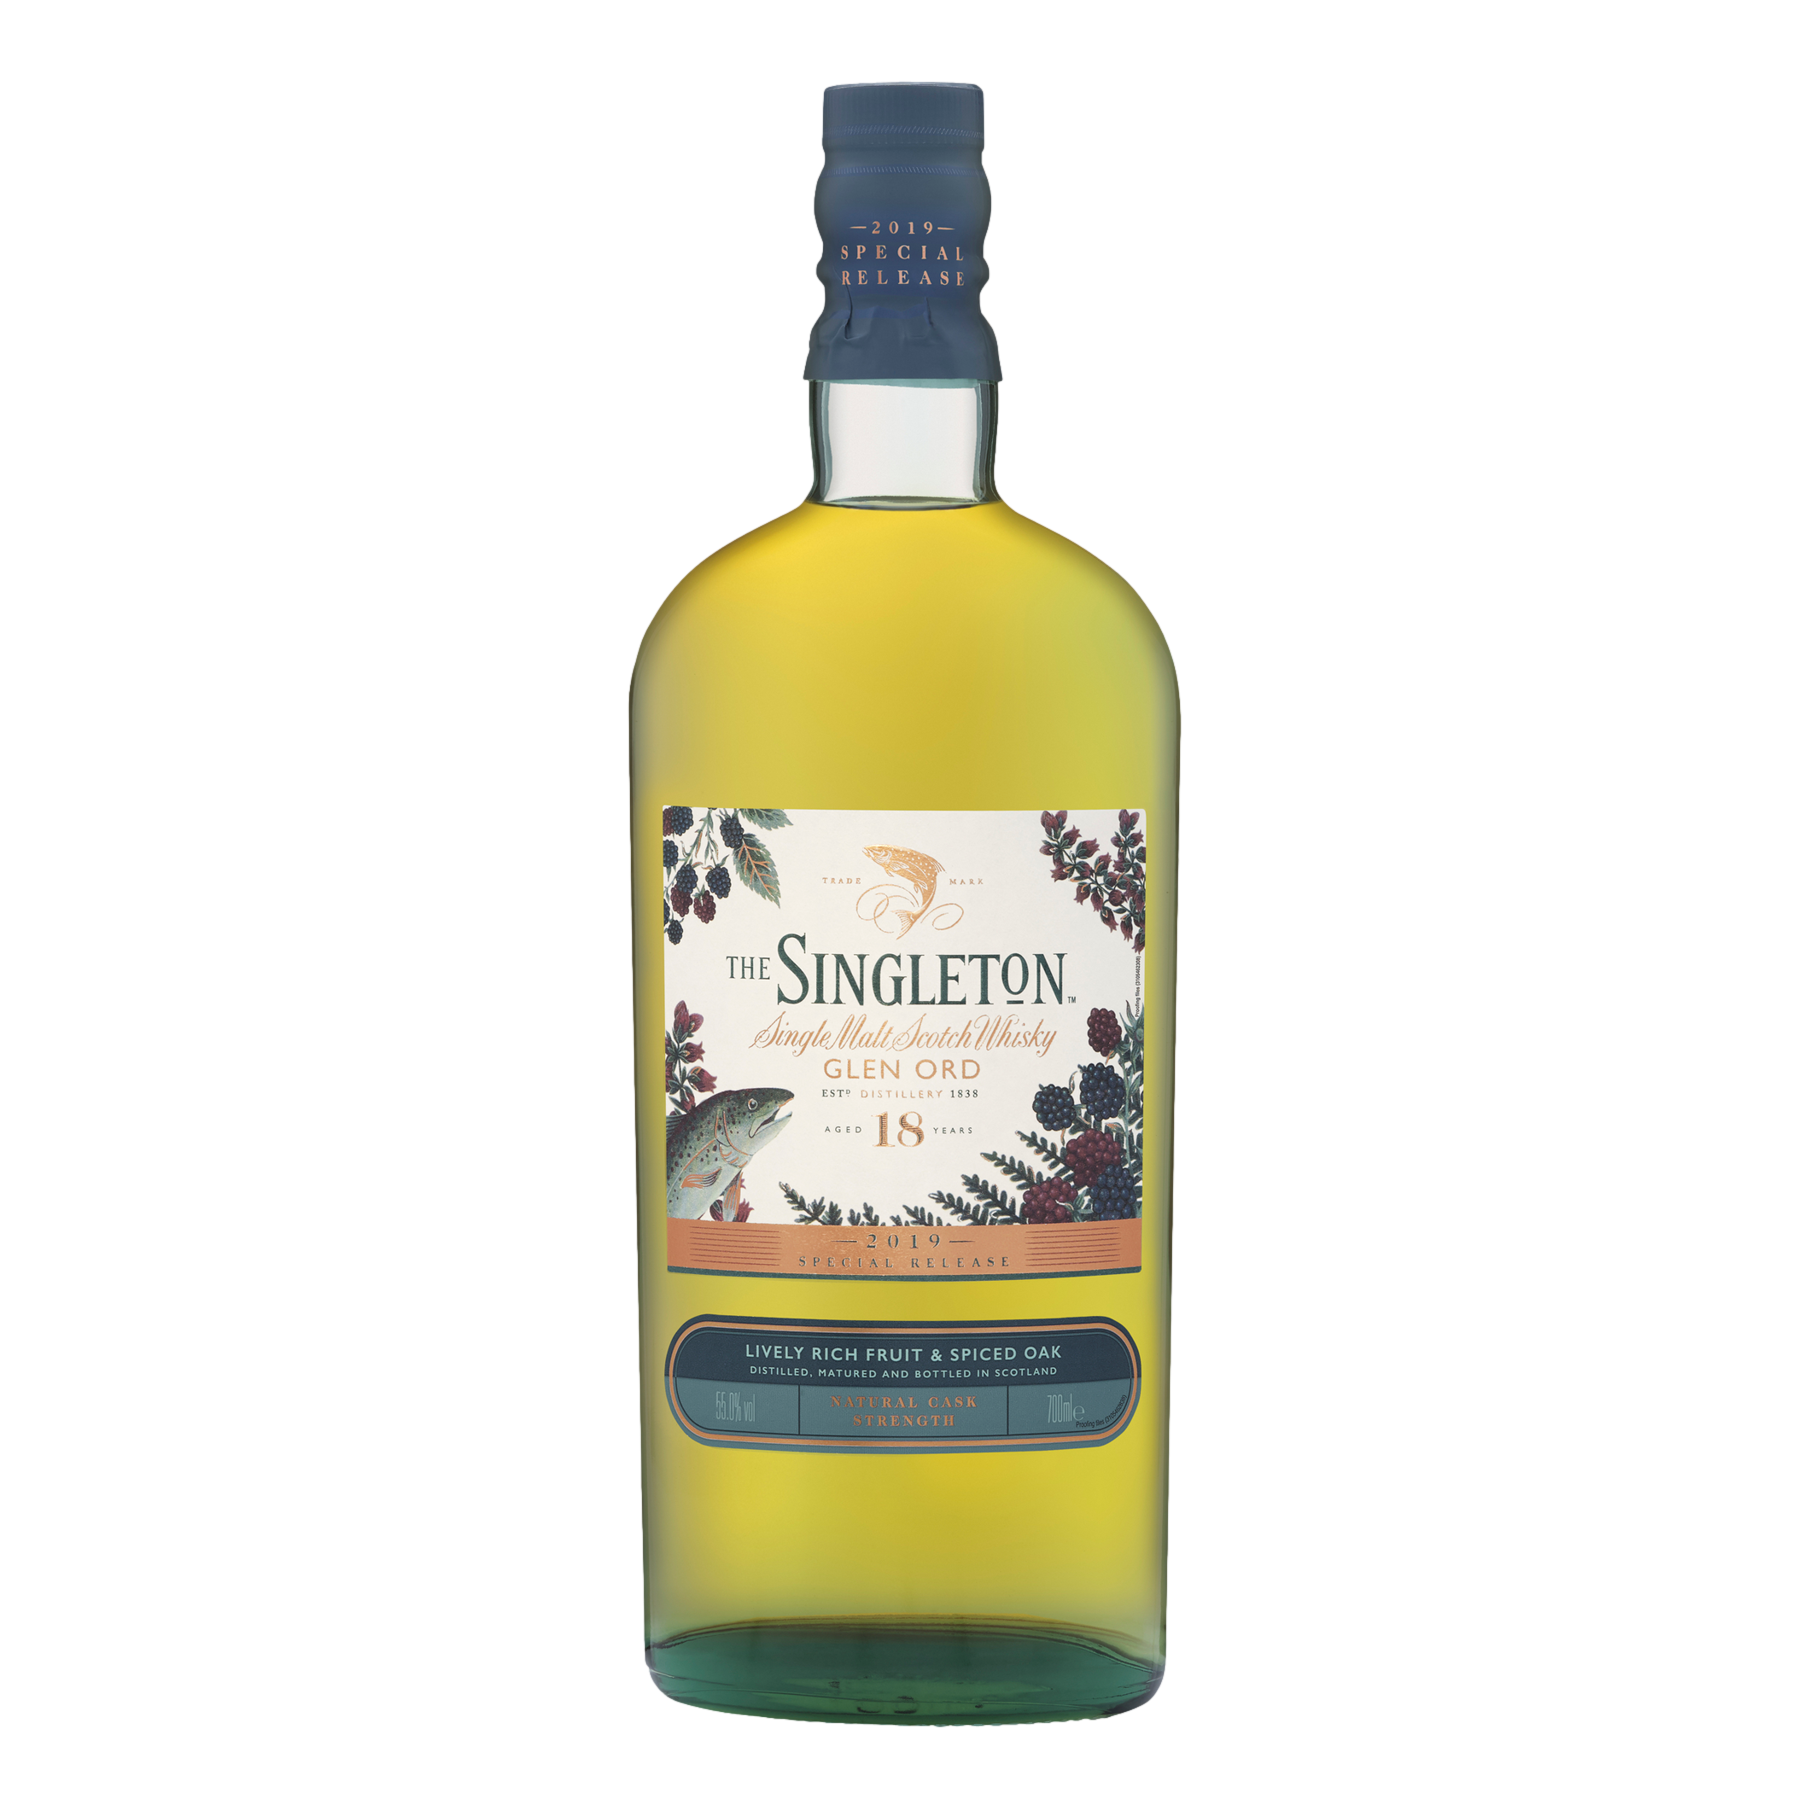 The Singleton 2019 Special Release Single Malt Scotch Whisky 18YO 700ml